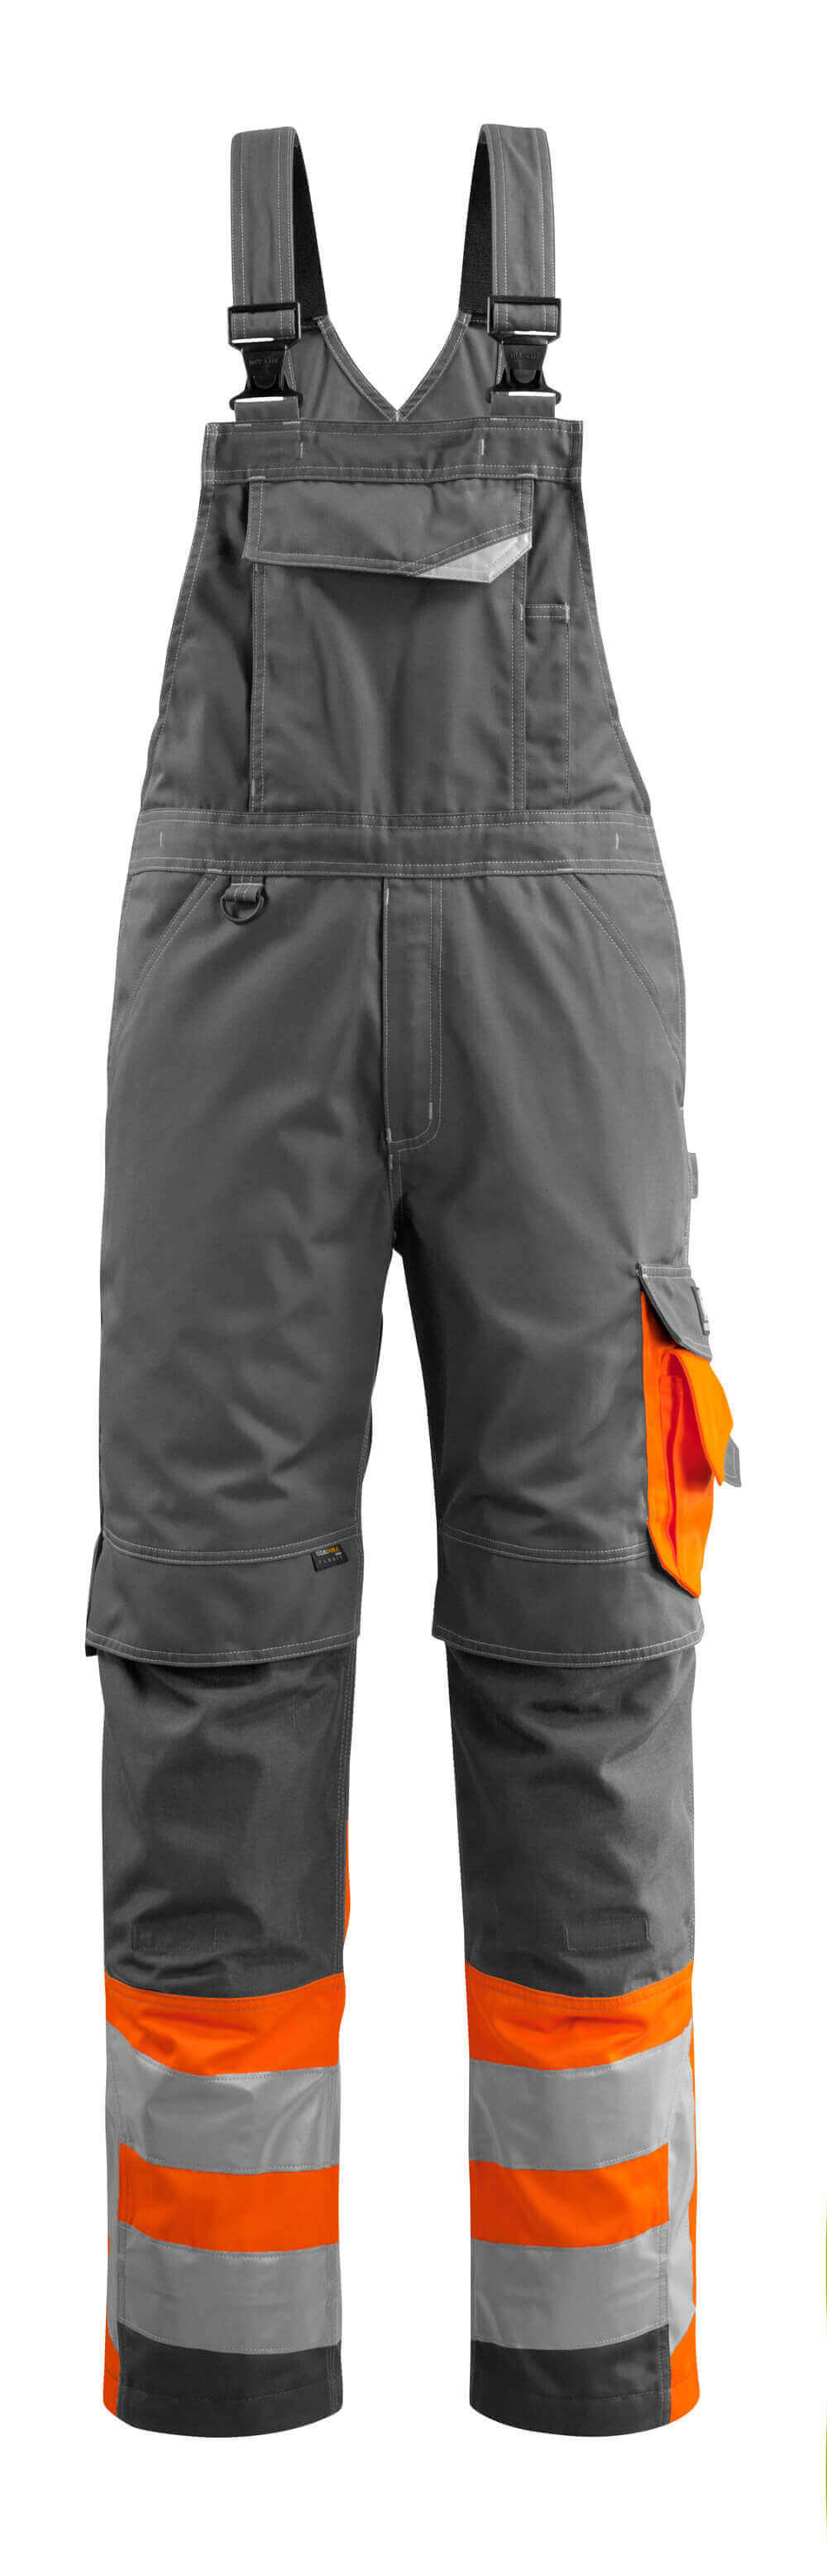 Mascot SAFE SUPREME  Sunderland Bib & Brace with kneepad pockets 15669 dark anthracite/hi-vis orange